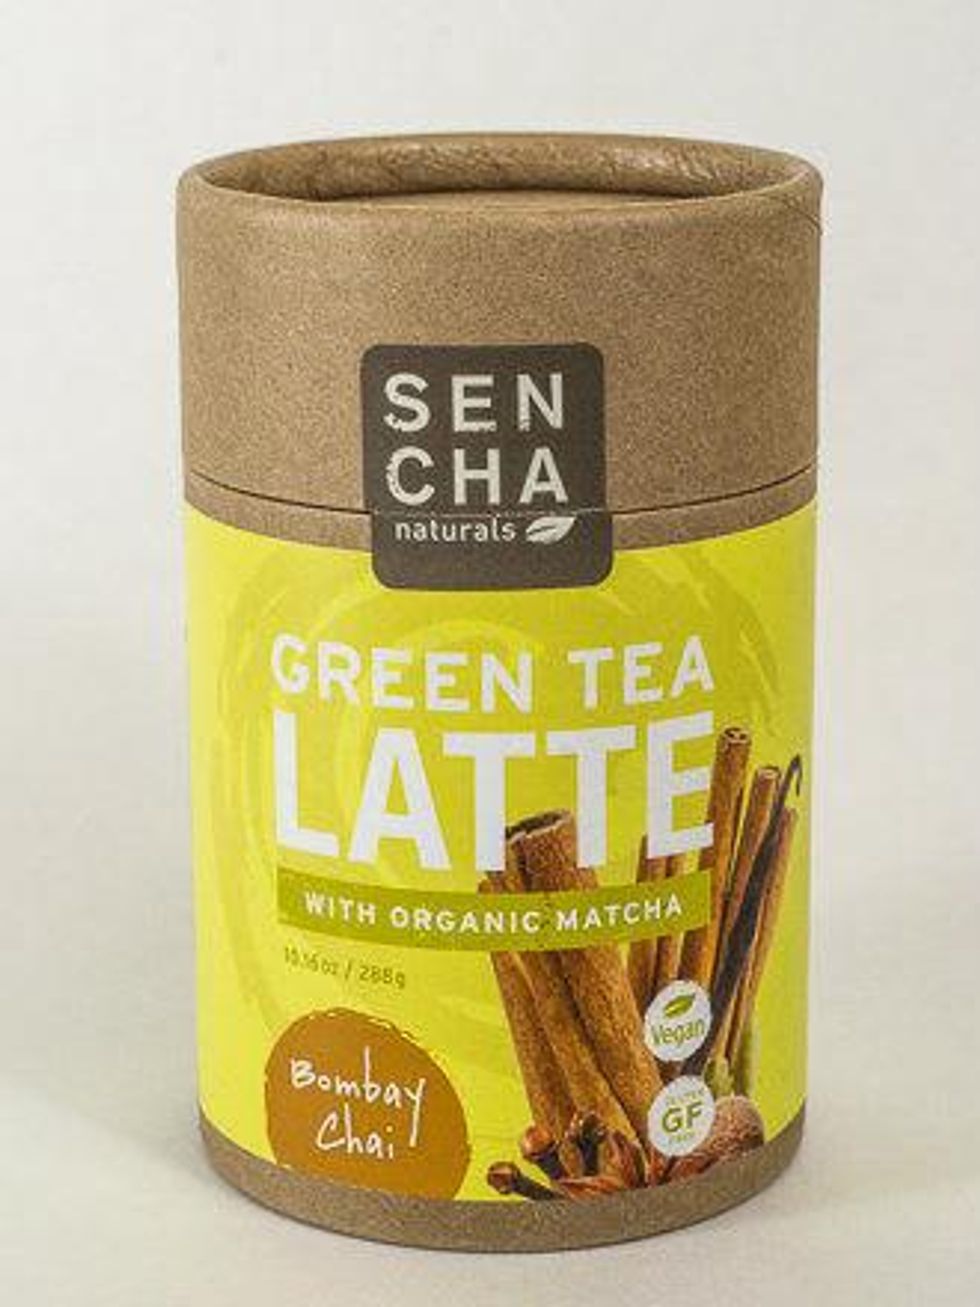 Sen Cha green tea latte